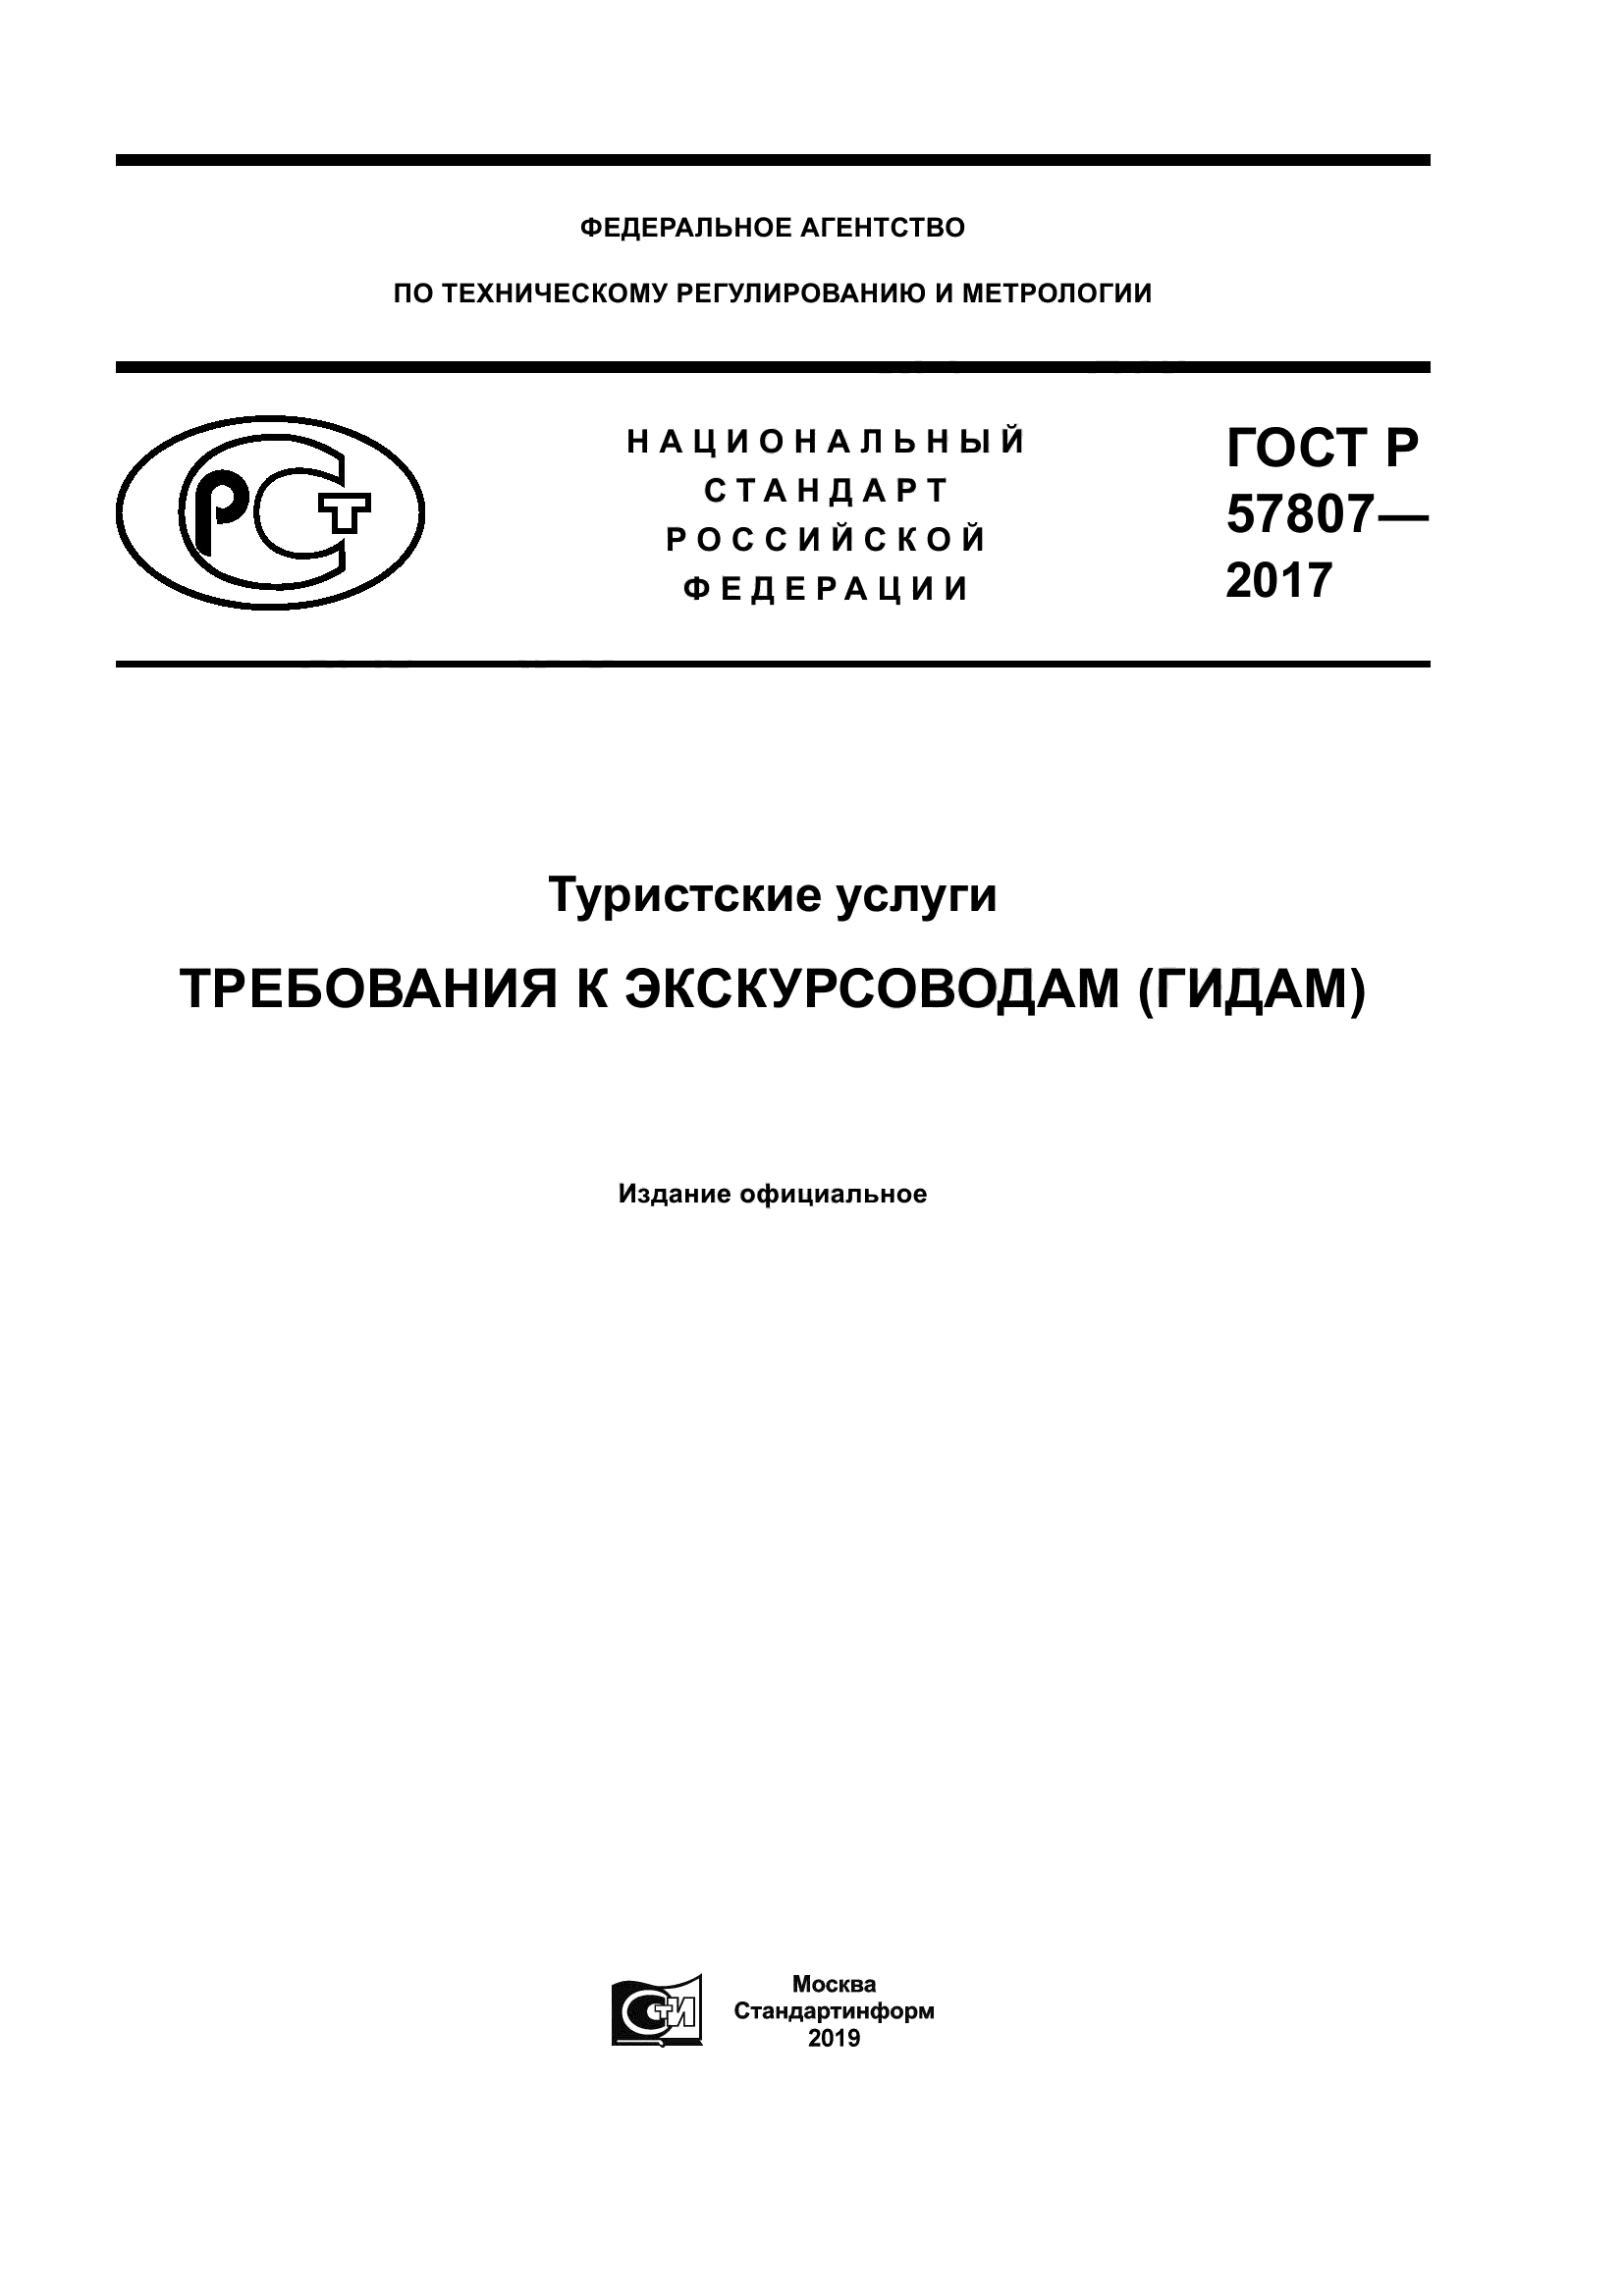 ГОСТ Р 57807-2017